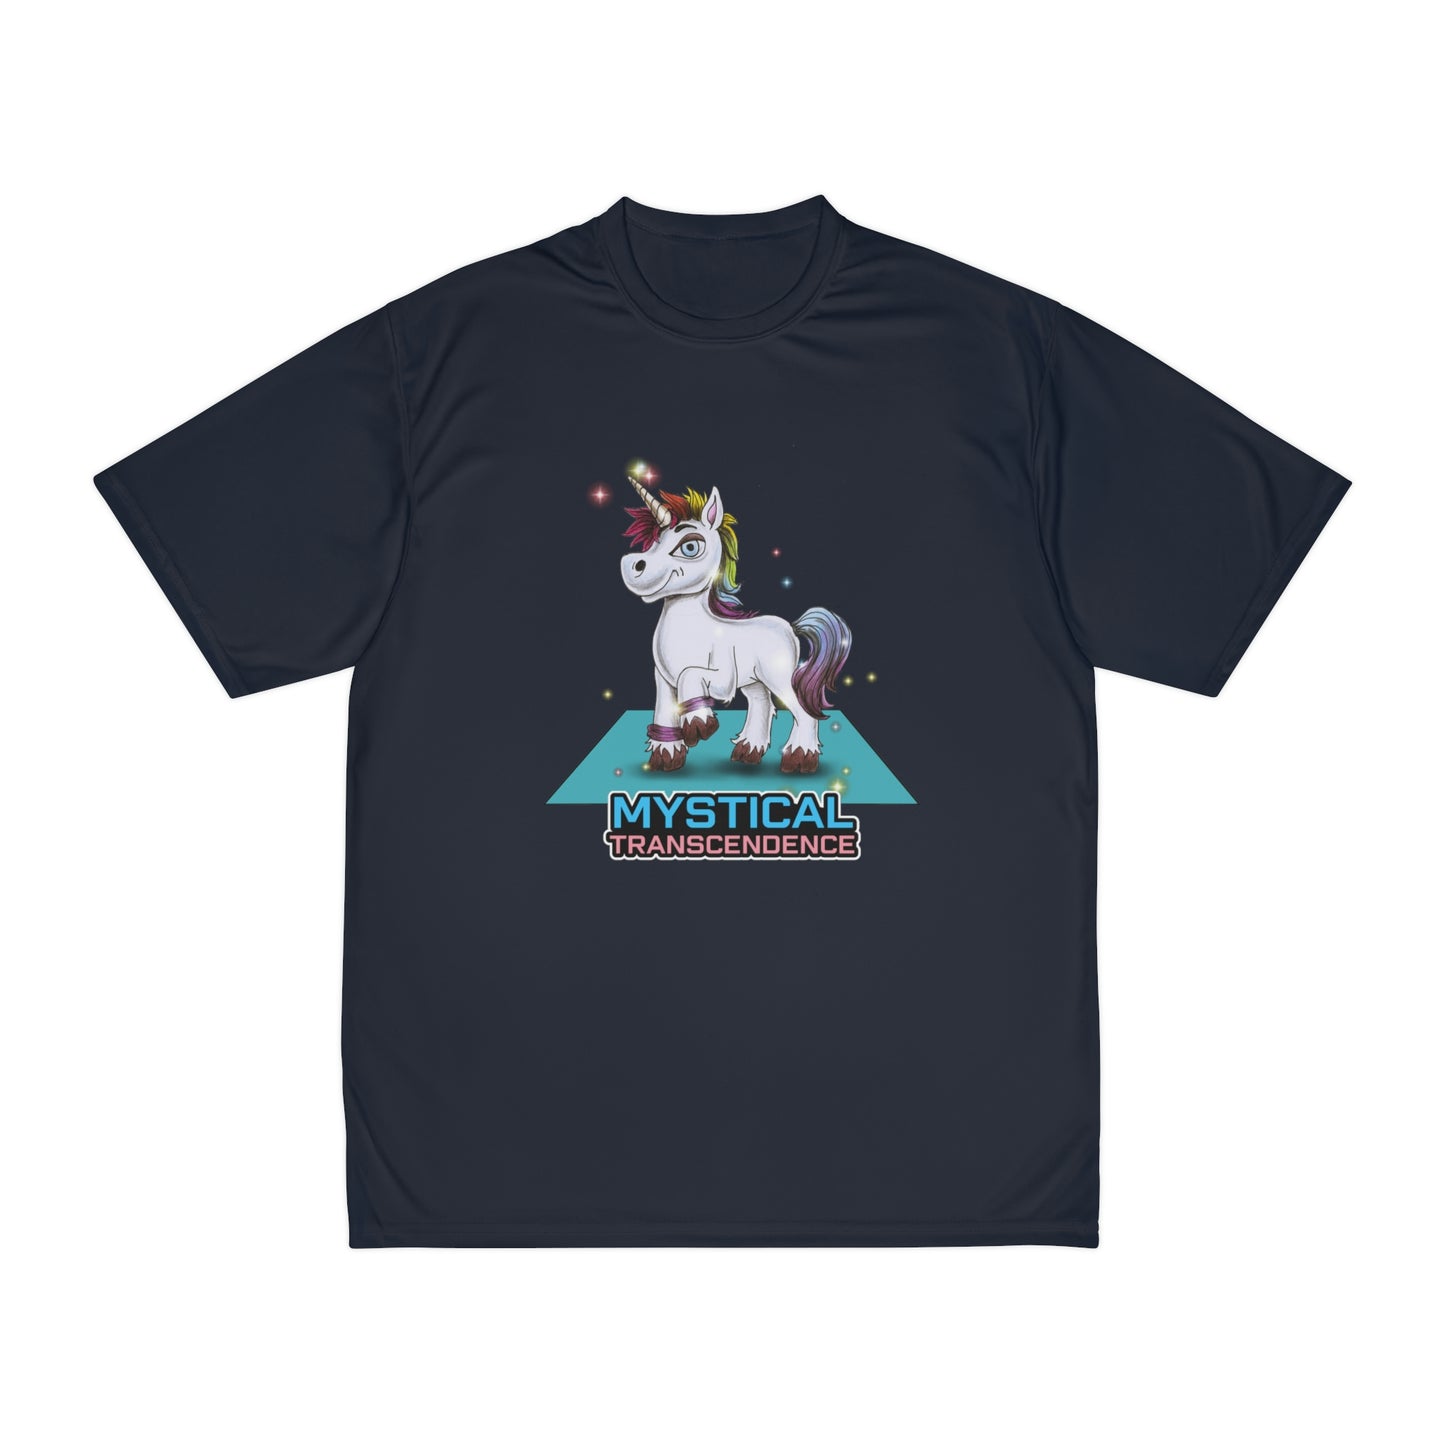 Adorable Unicorn Performance T-Shirt